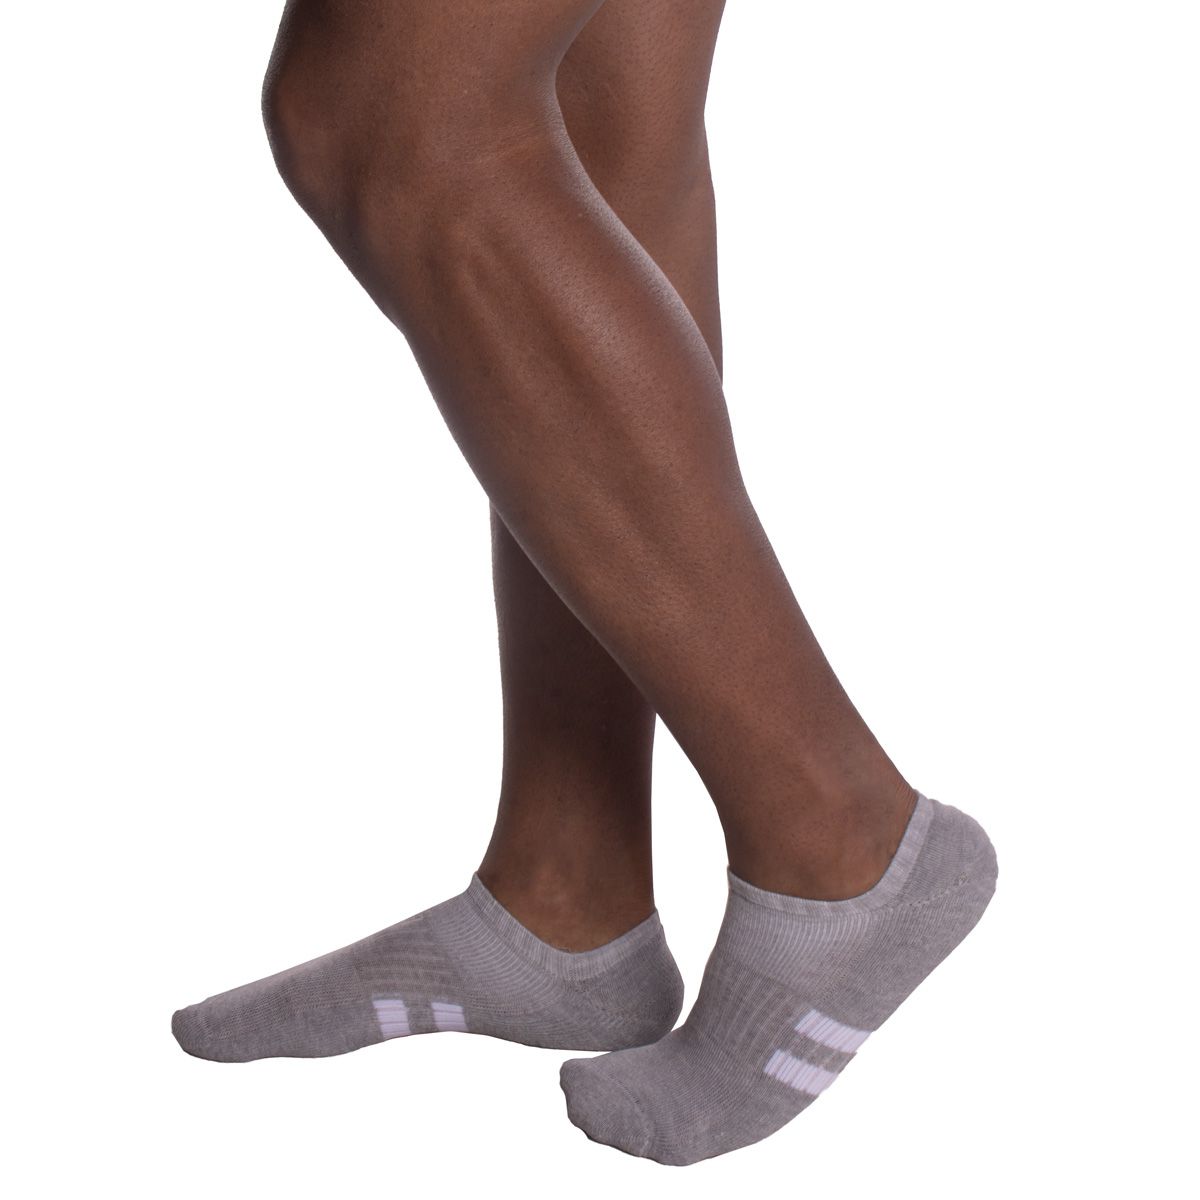 KIT  com 3 Meias sapatilha esportiva masculina Selene  - Bra Lingerie